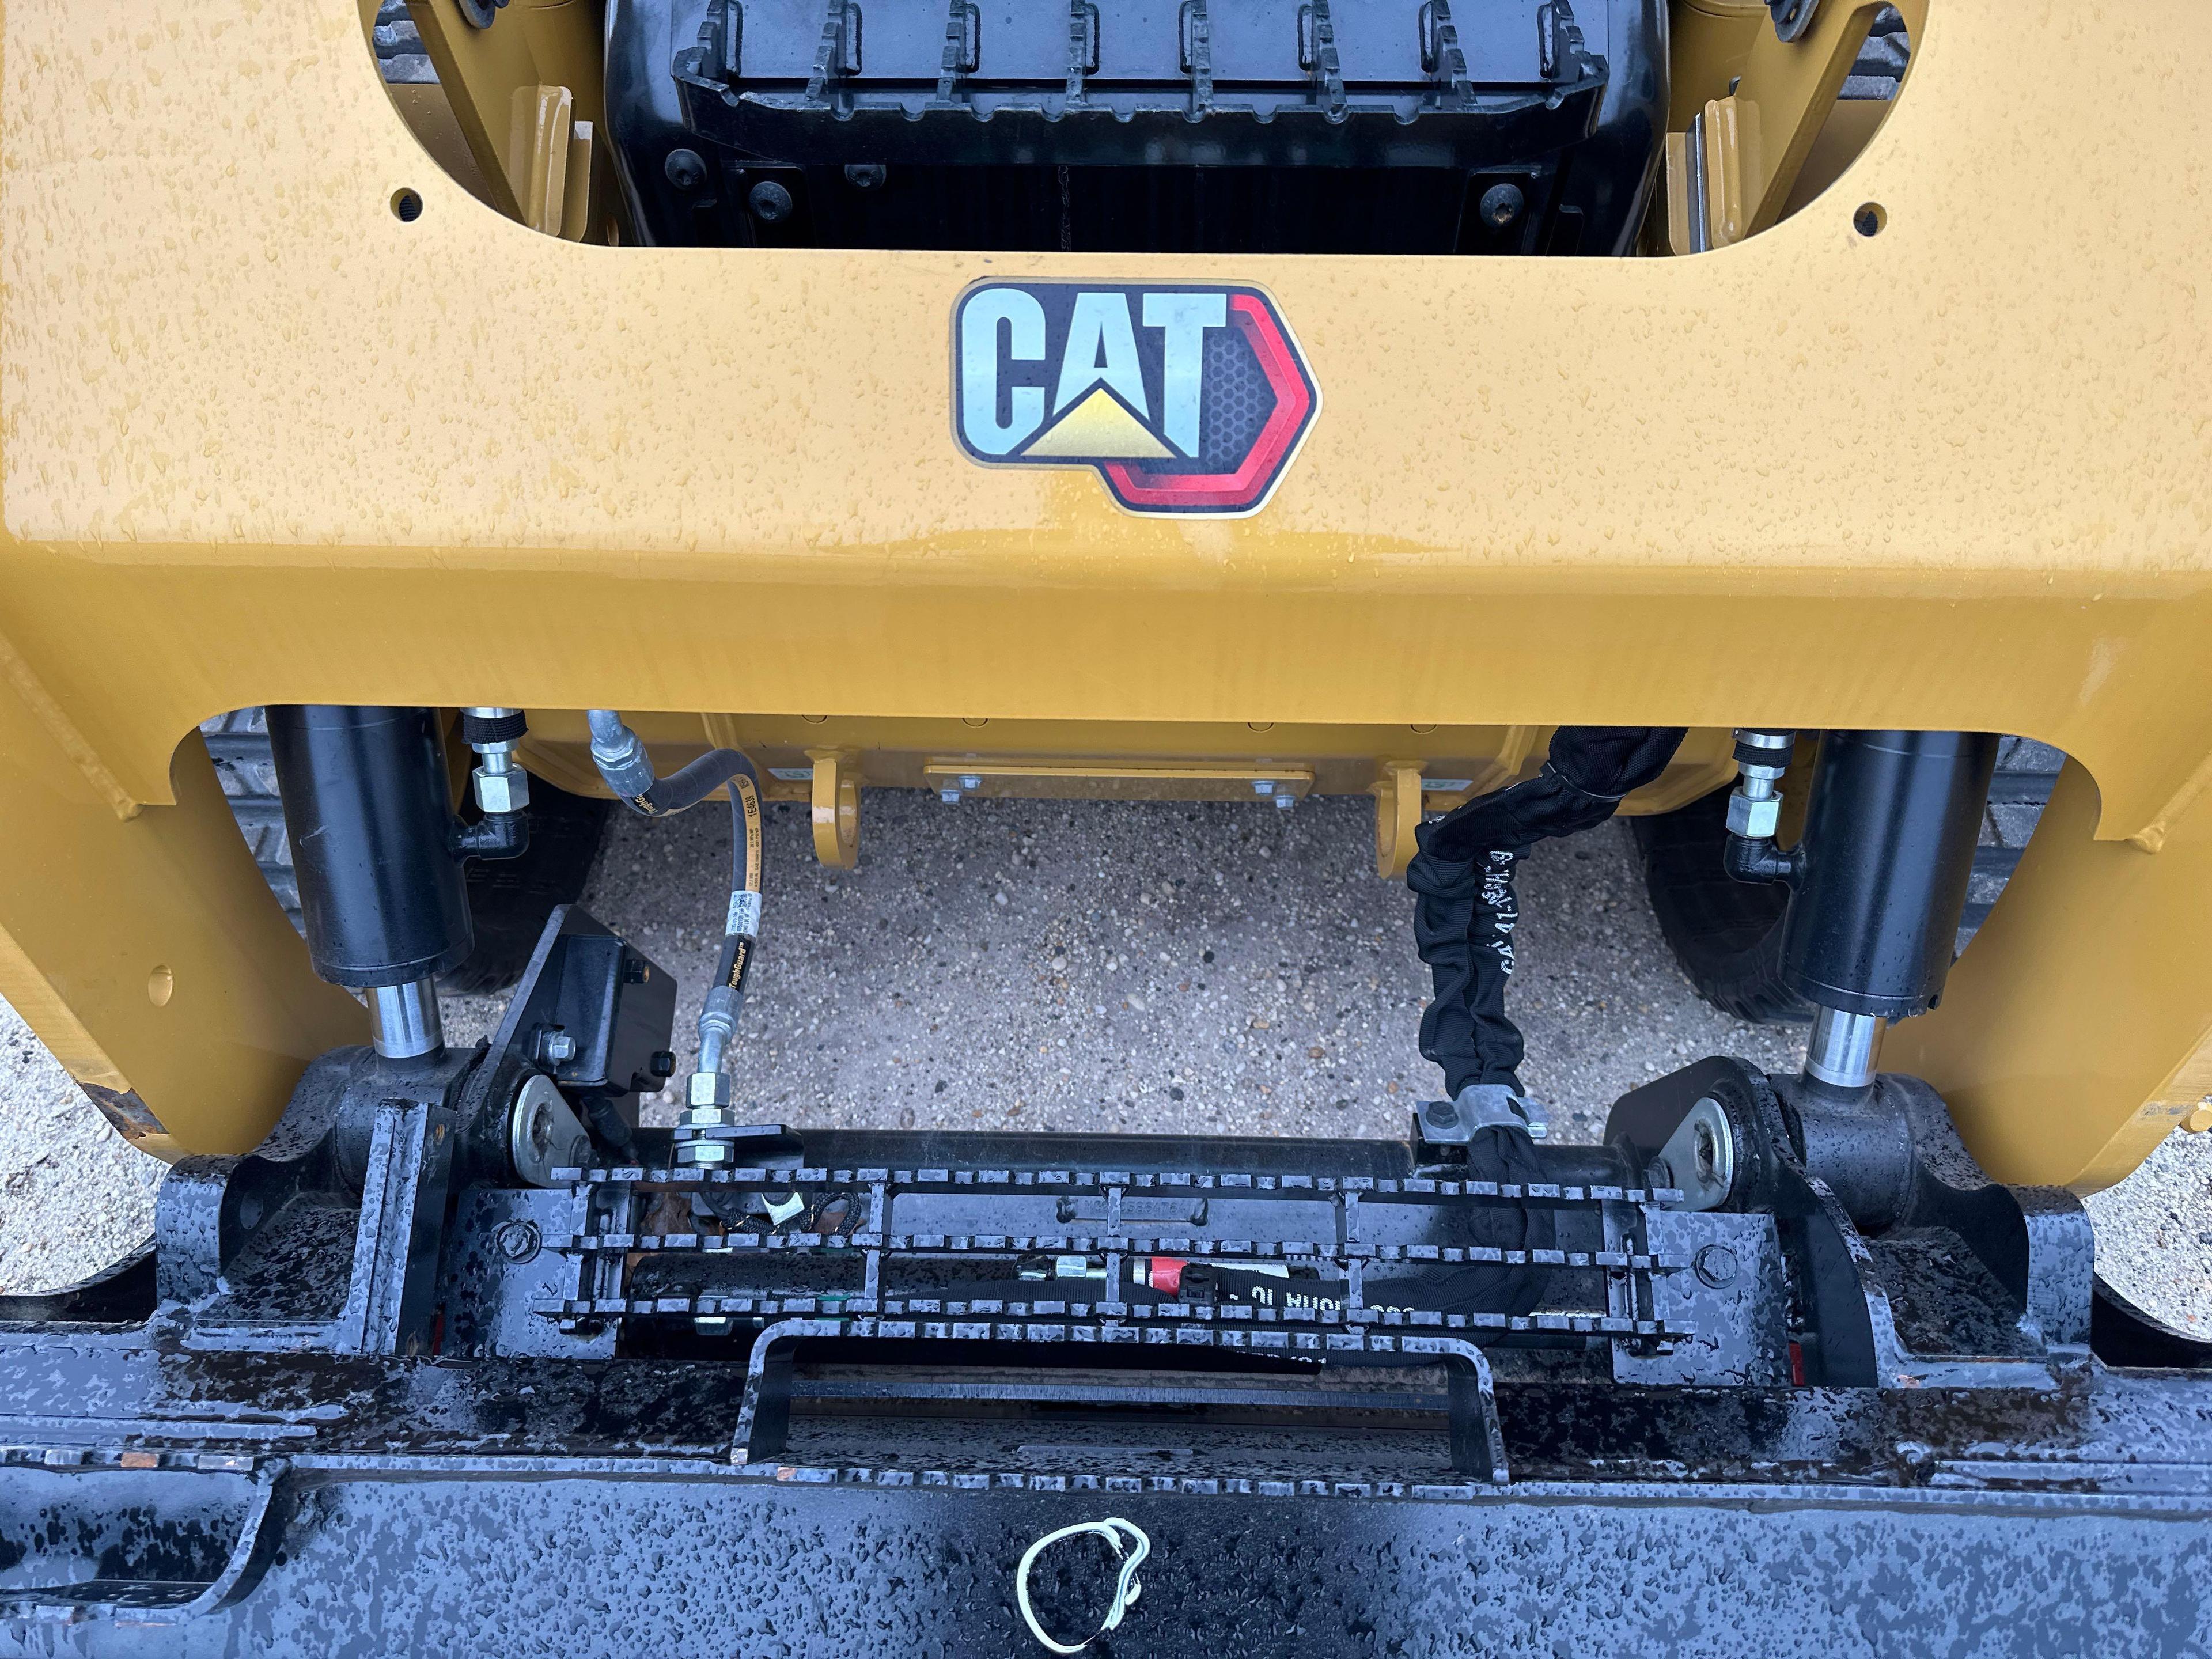 2023 CAT 259D3 RUBBER TRACKED SKID STEER powered by Cat C3.3B DIT EPA Tier 4F diesel engine, 74.3hp,